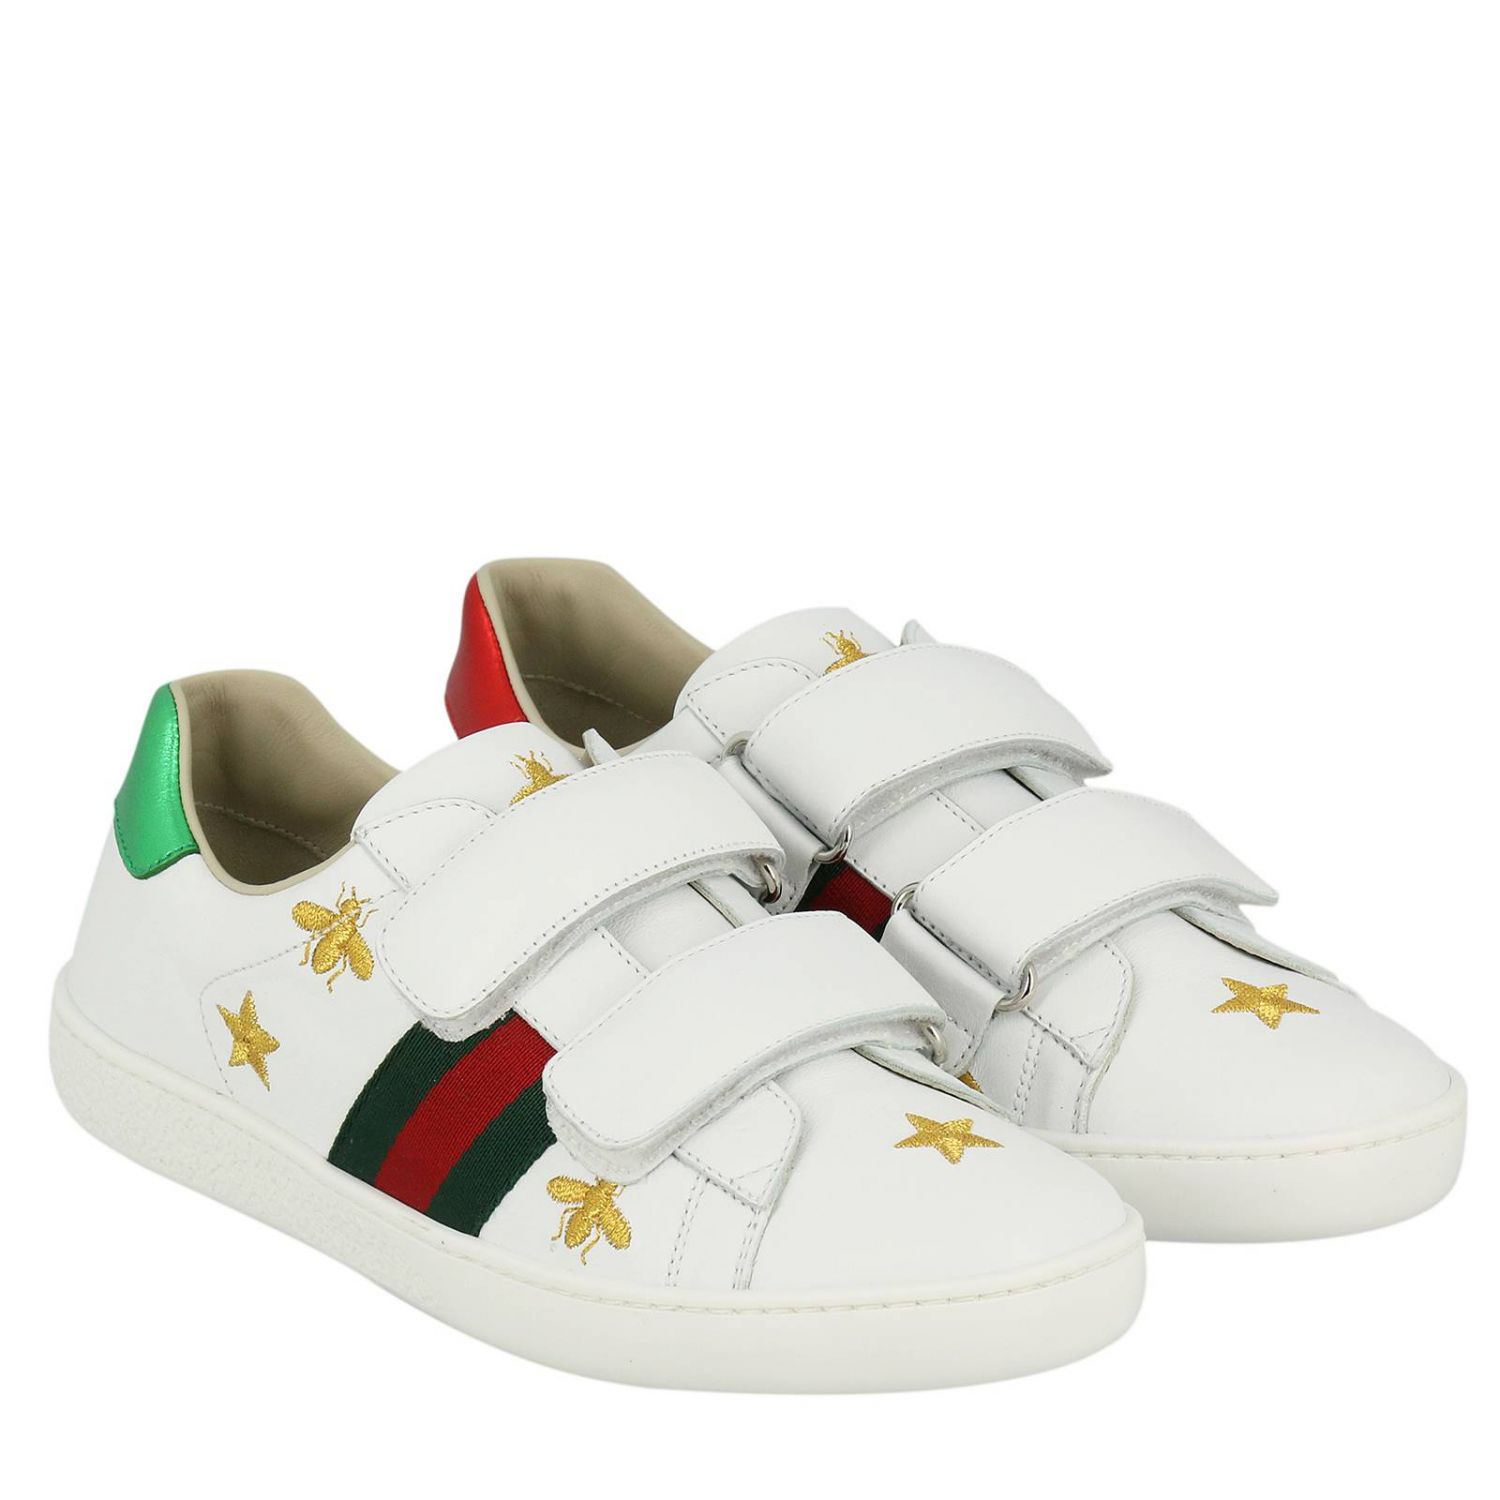 GUCCI: Shoes kids | Shoes Gucci Kids White | Shoes Gucci 508780 0II40 ...